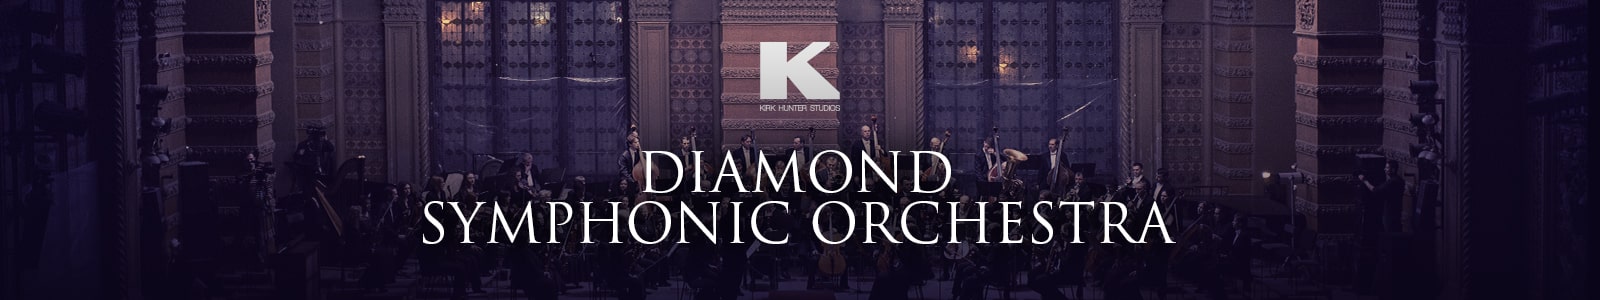 diamond symphonic orchestra